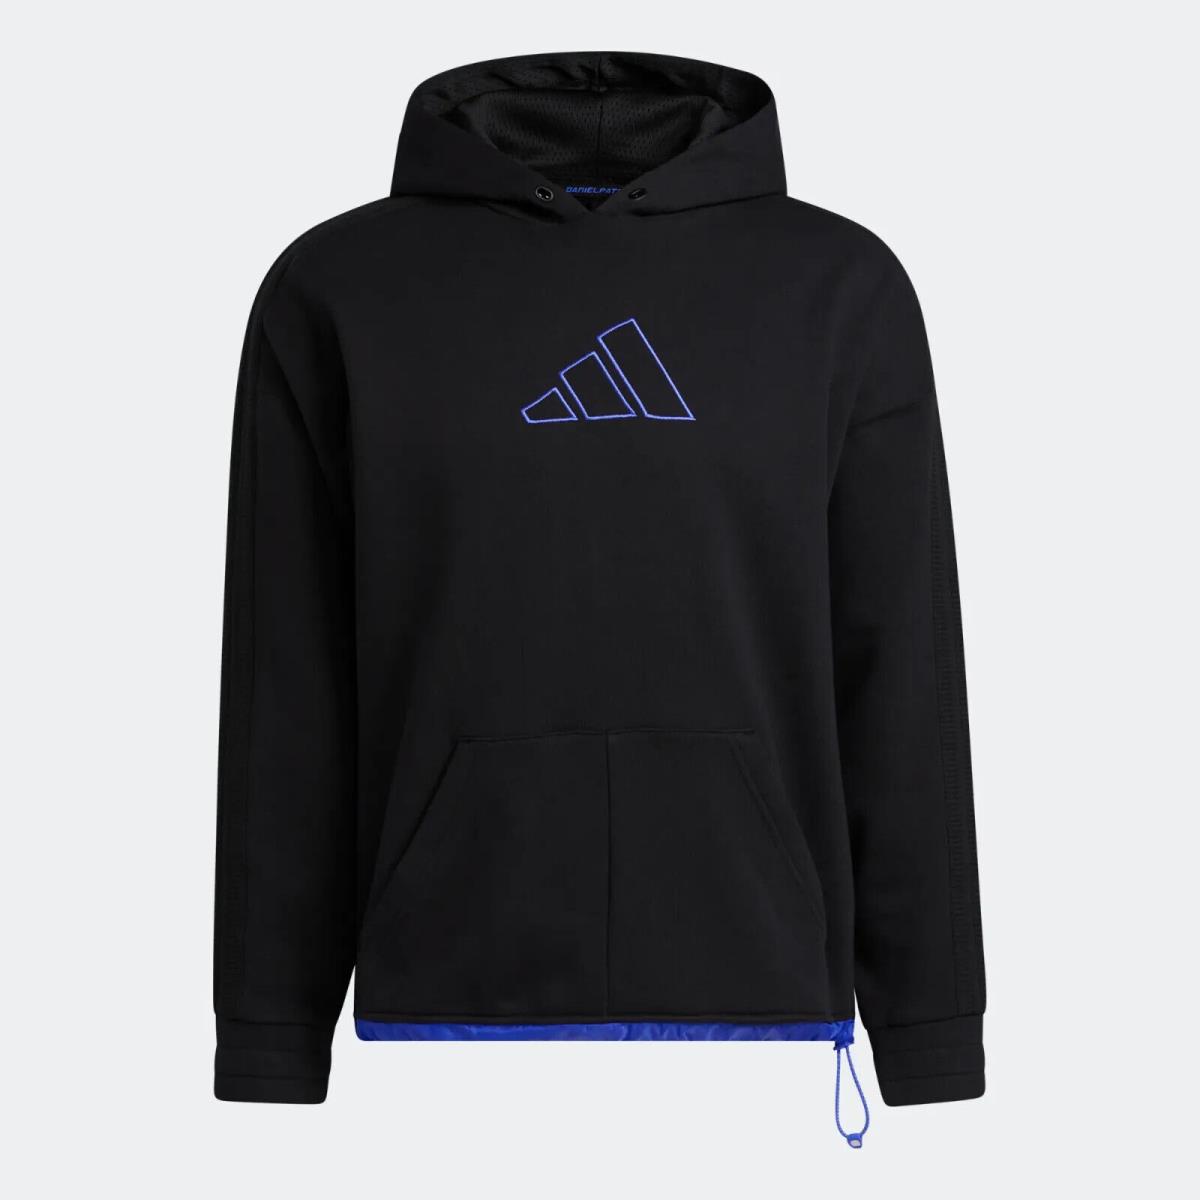 Adidas Daniel Patrick X Basketball Sweatshirt/hoodie GU2283 Men s XL